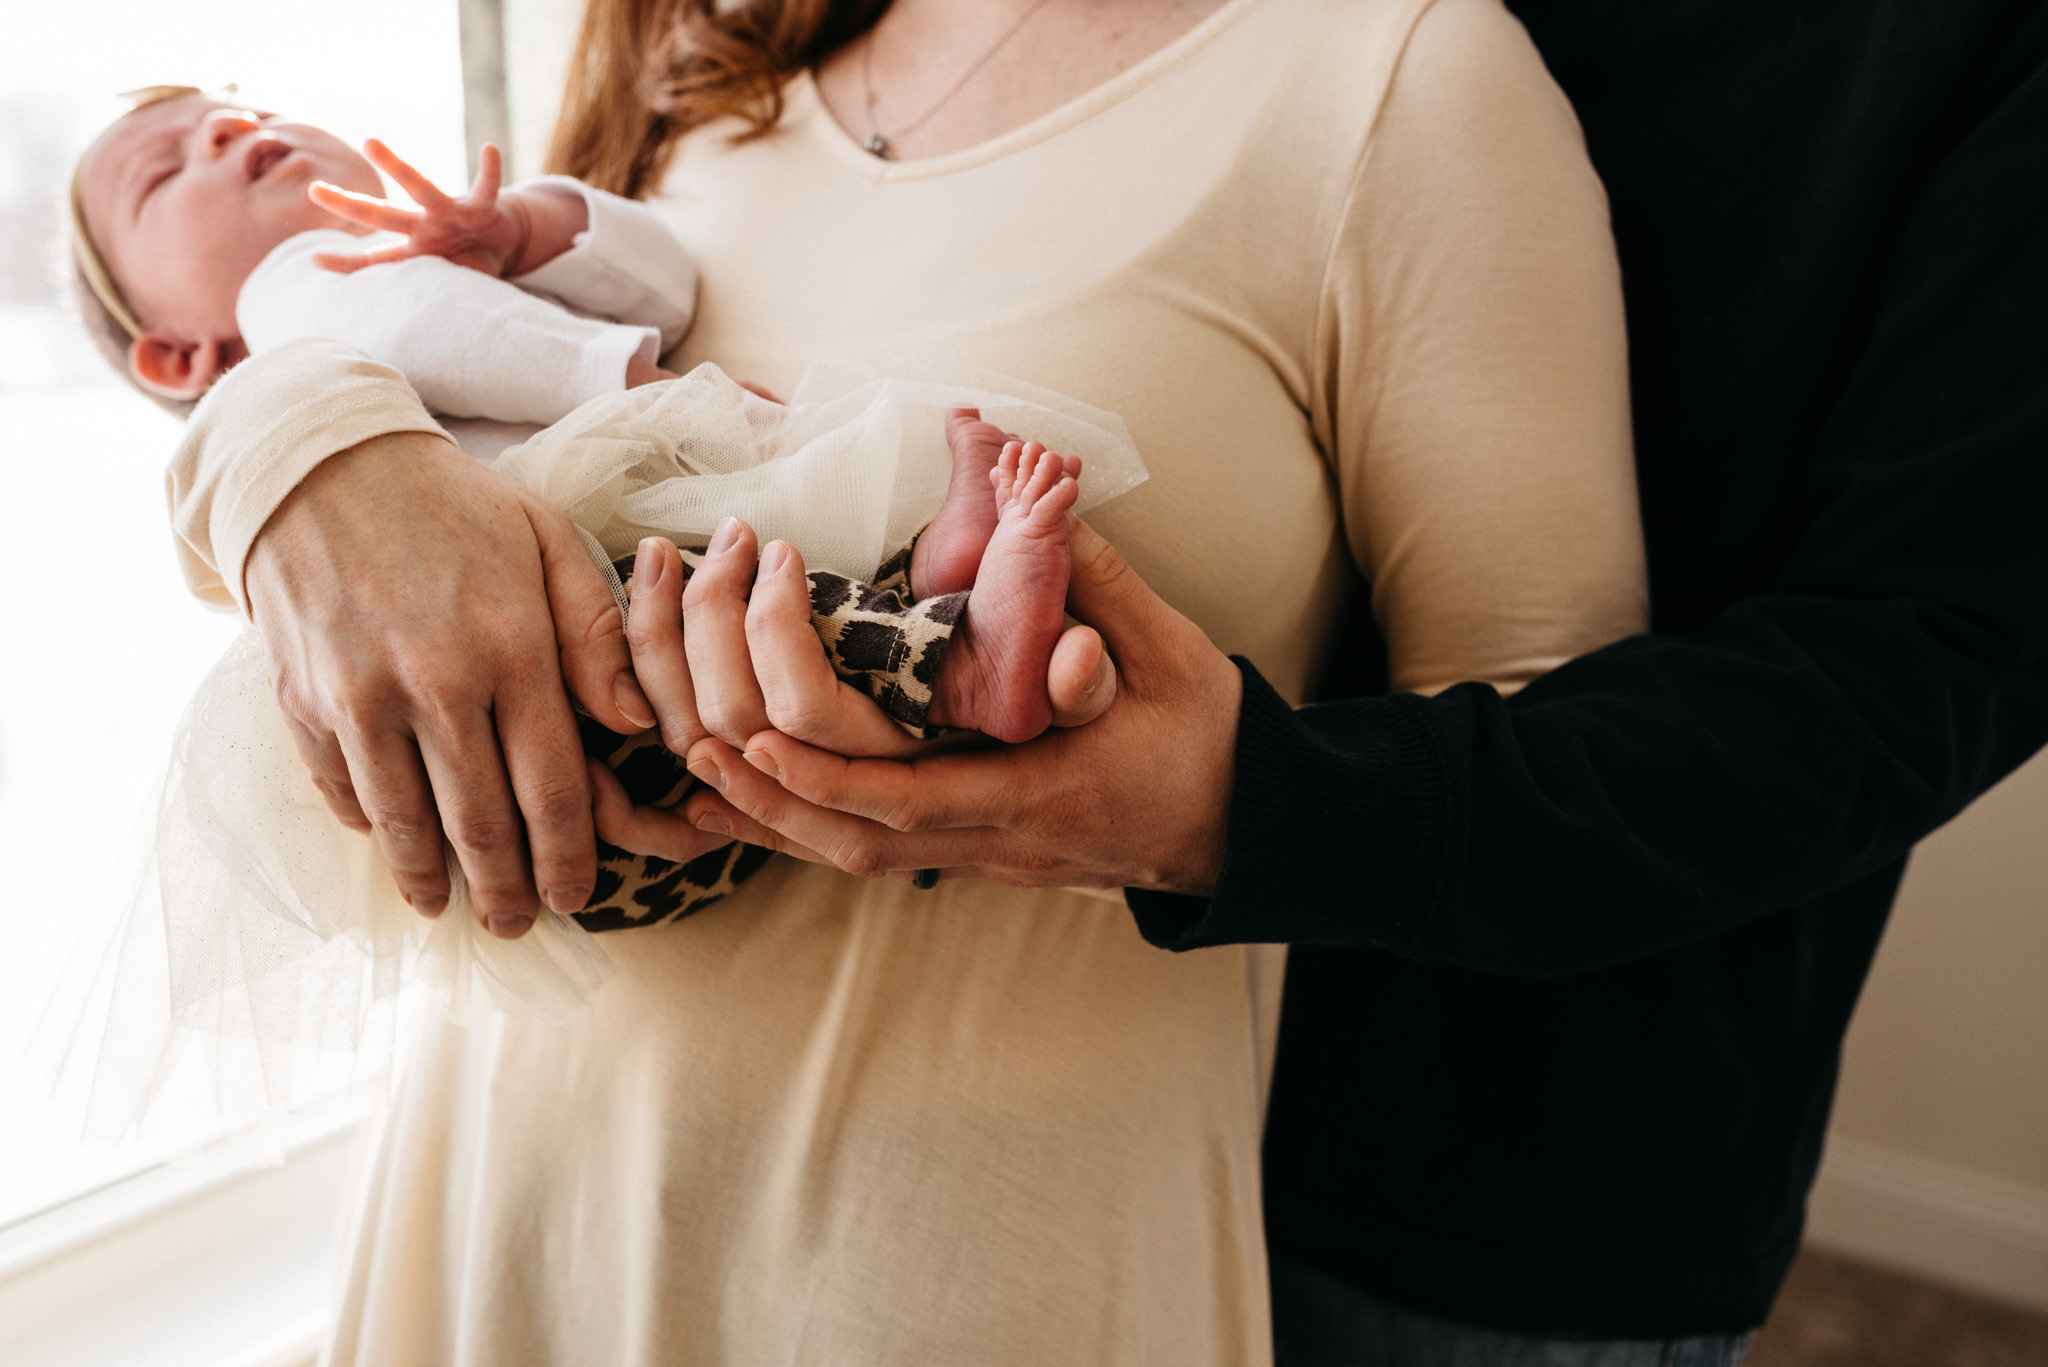 Parents-holding-newborn-daughter-Columbus-Ohio-Photographer-Erika-Venci-Photography